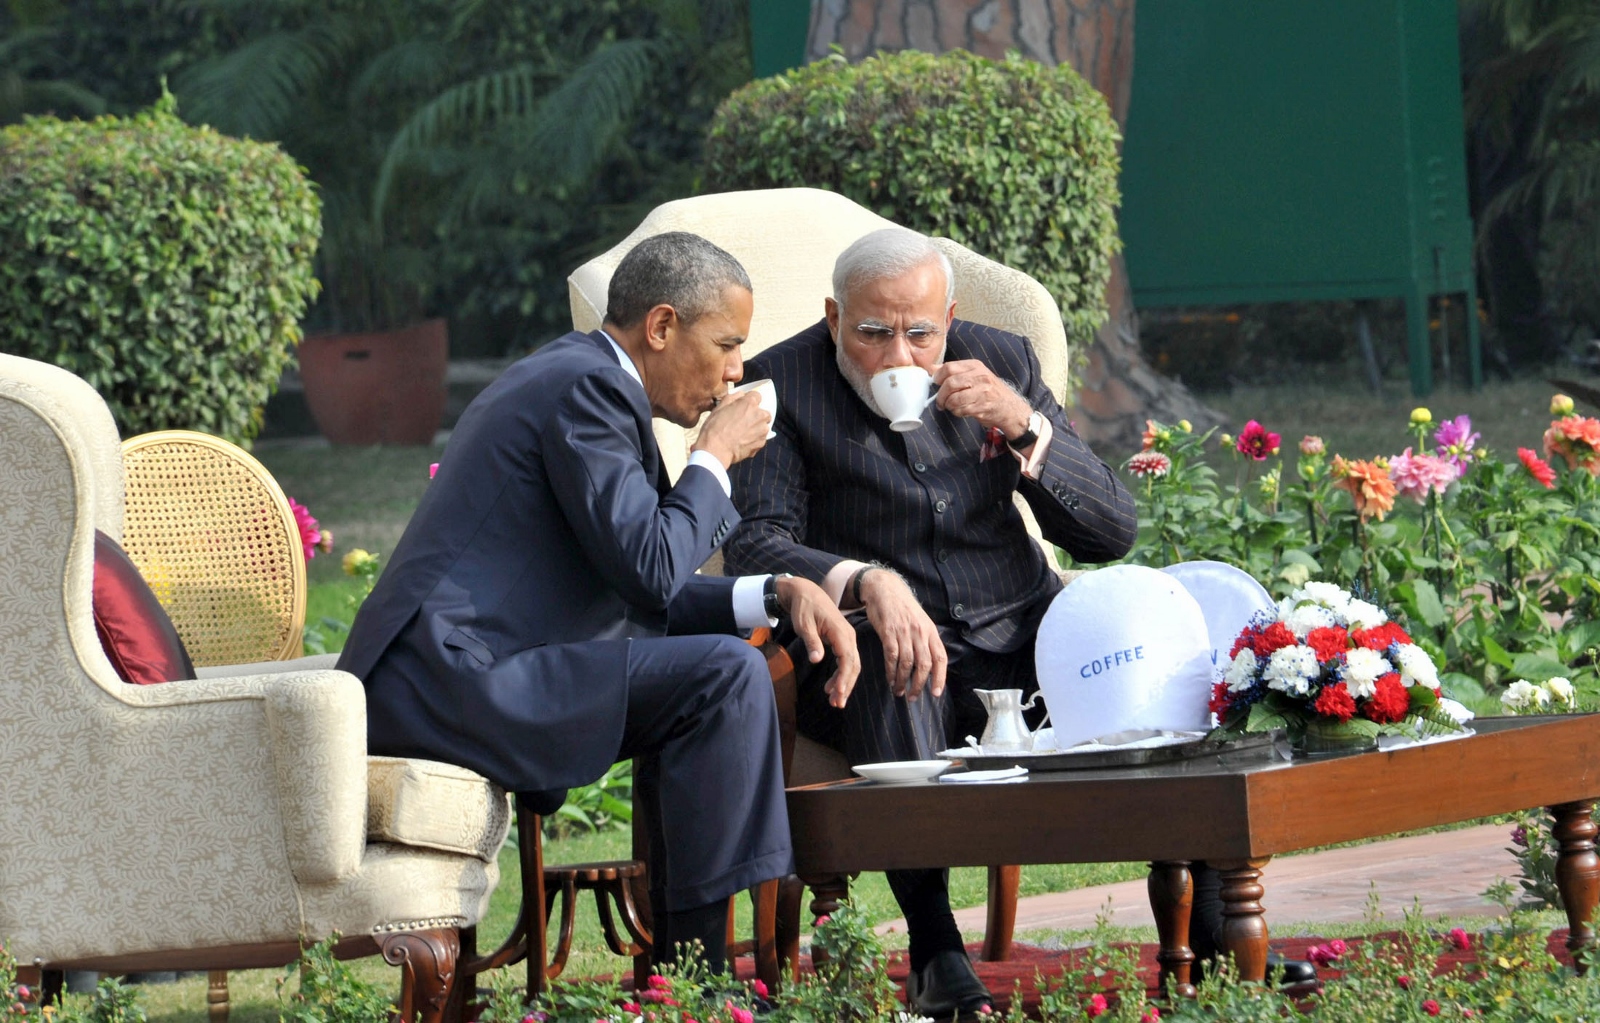 Obama in India Had tea with PM Modi